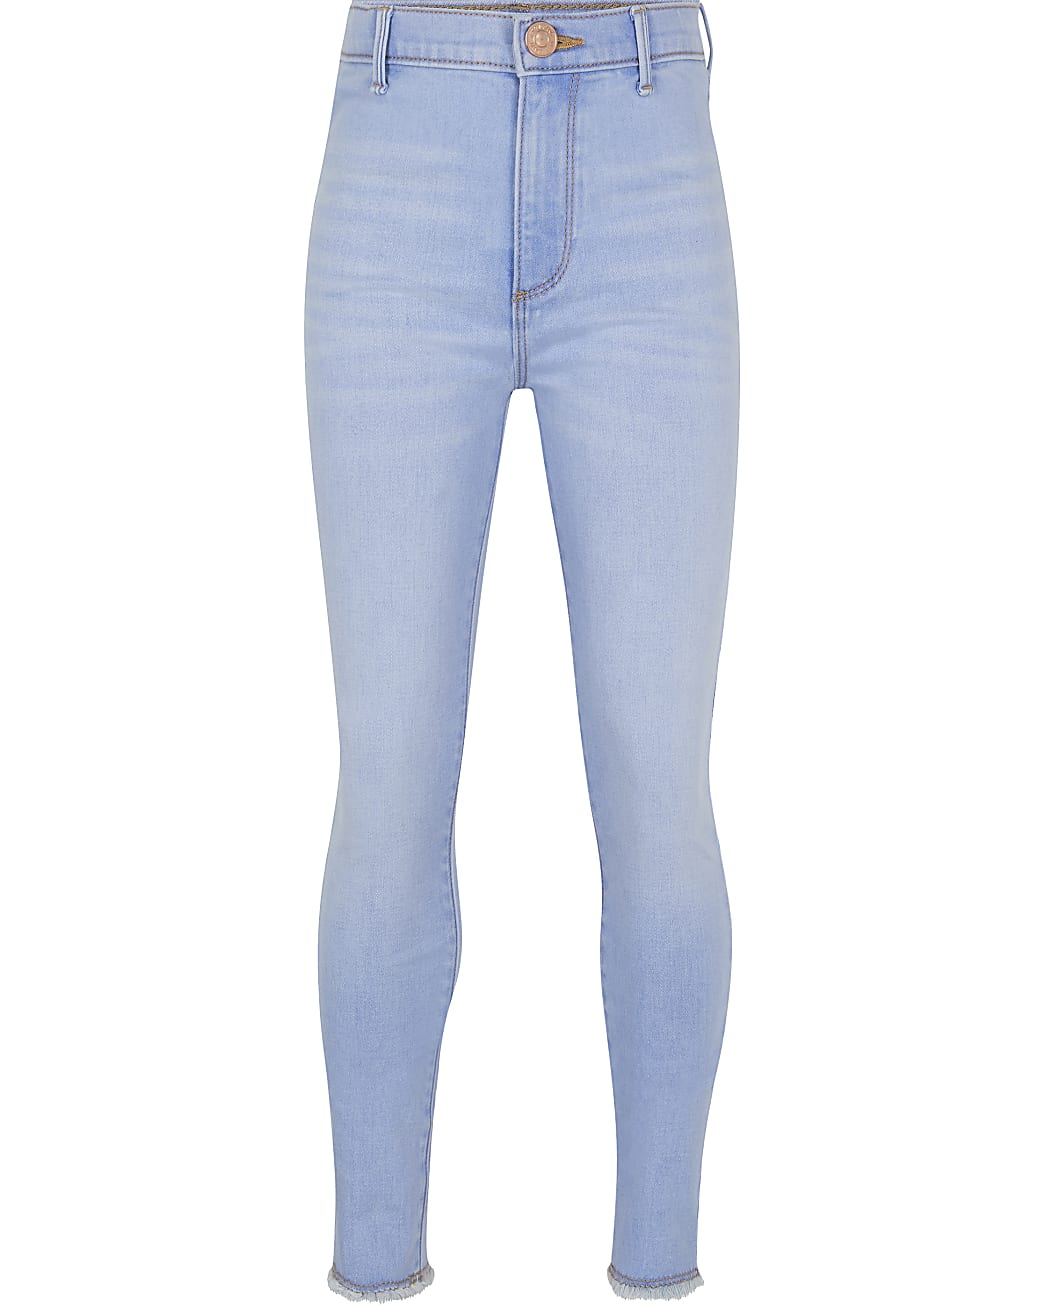 Girls blue skinny fit jeans